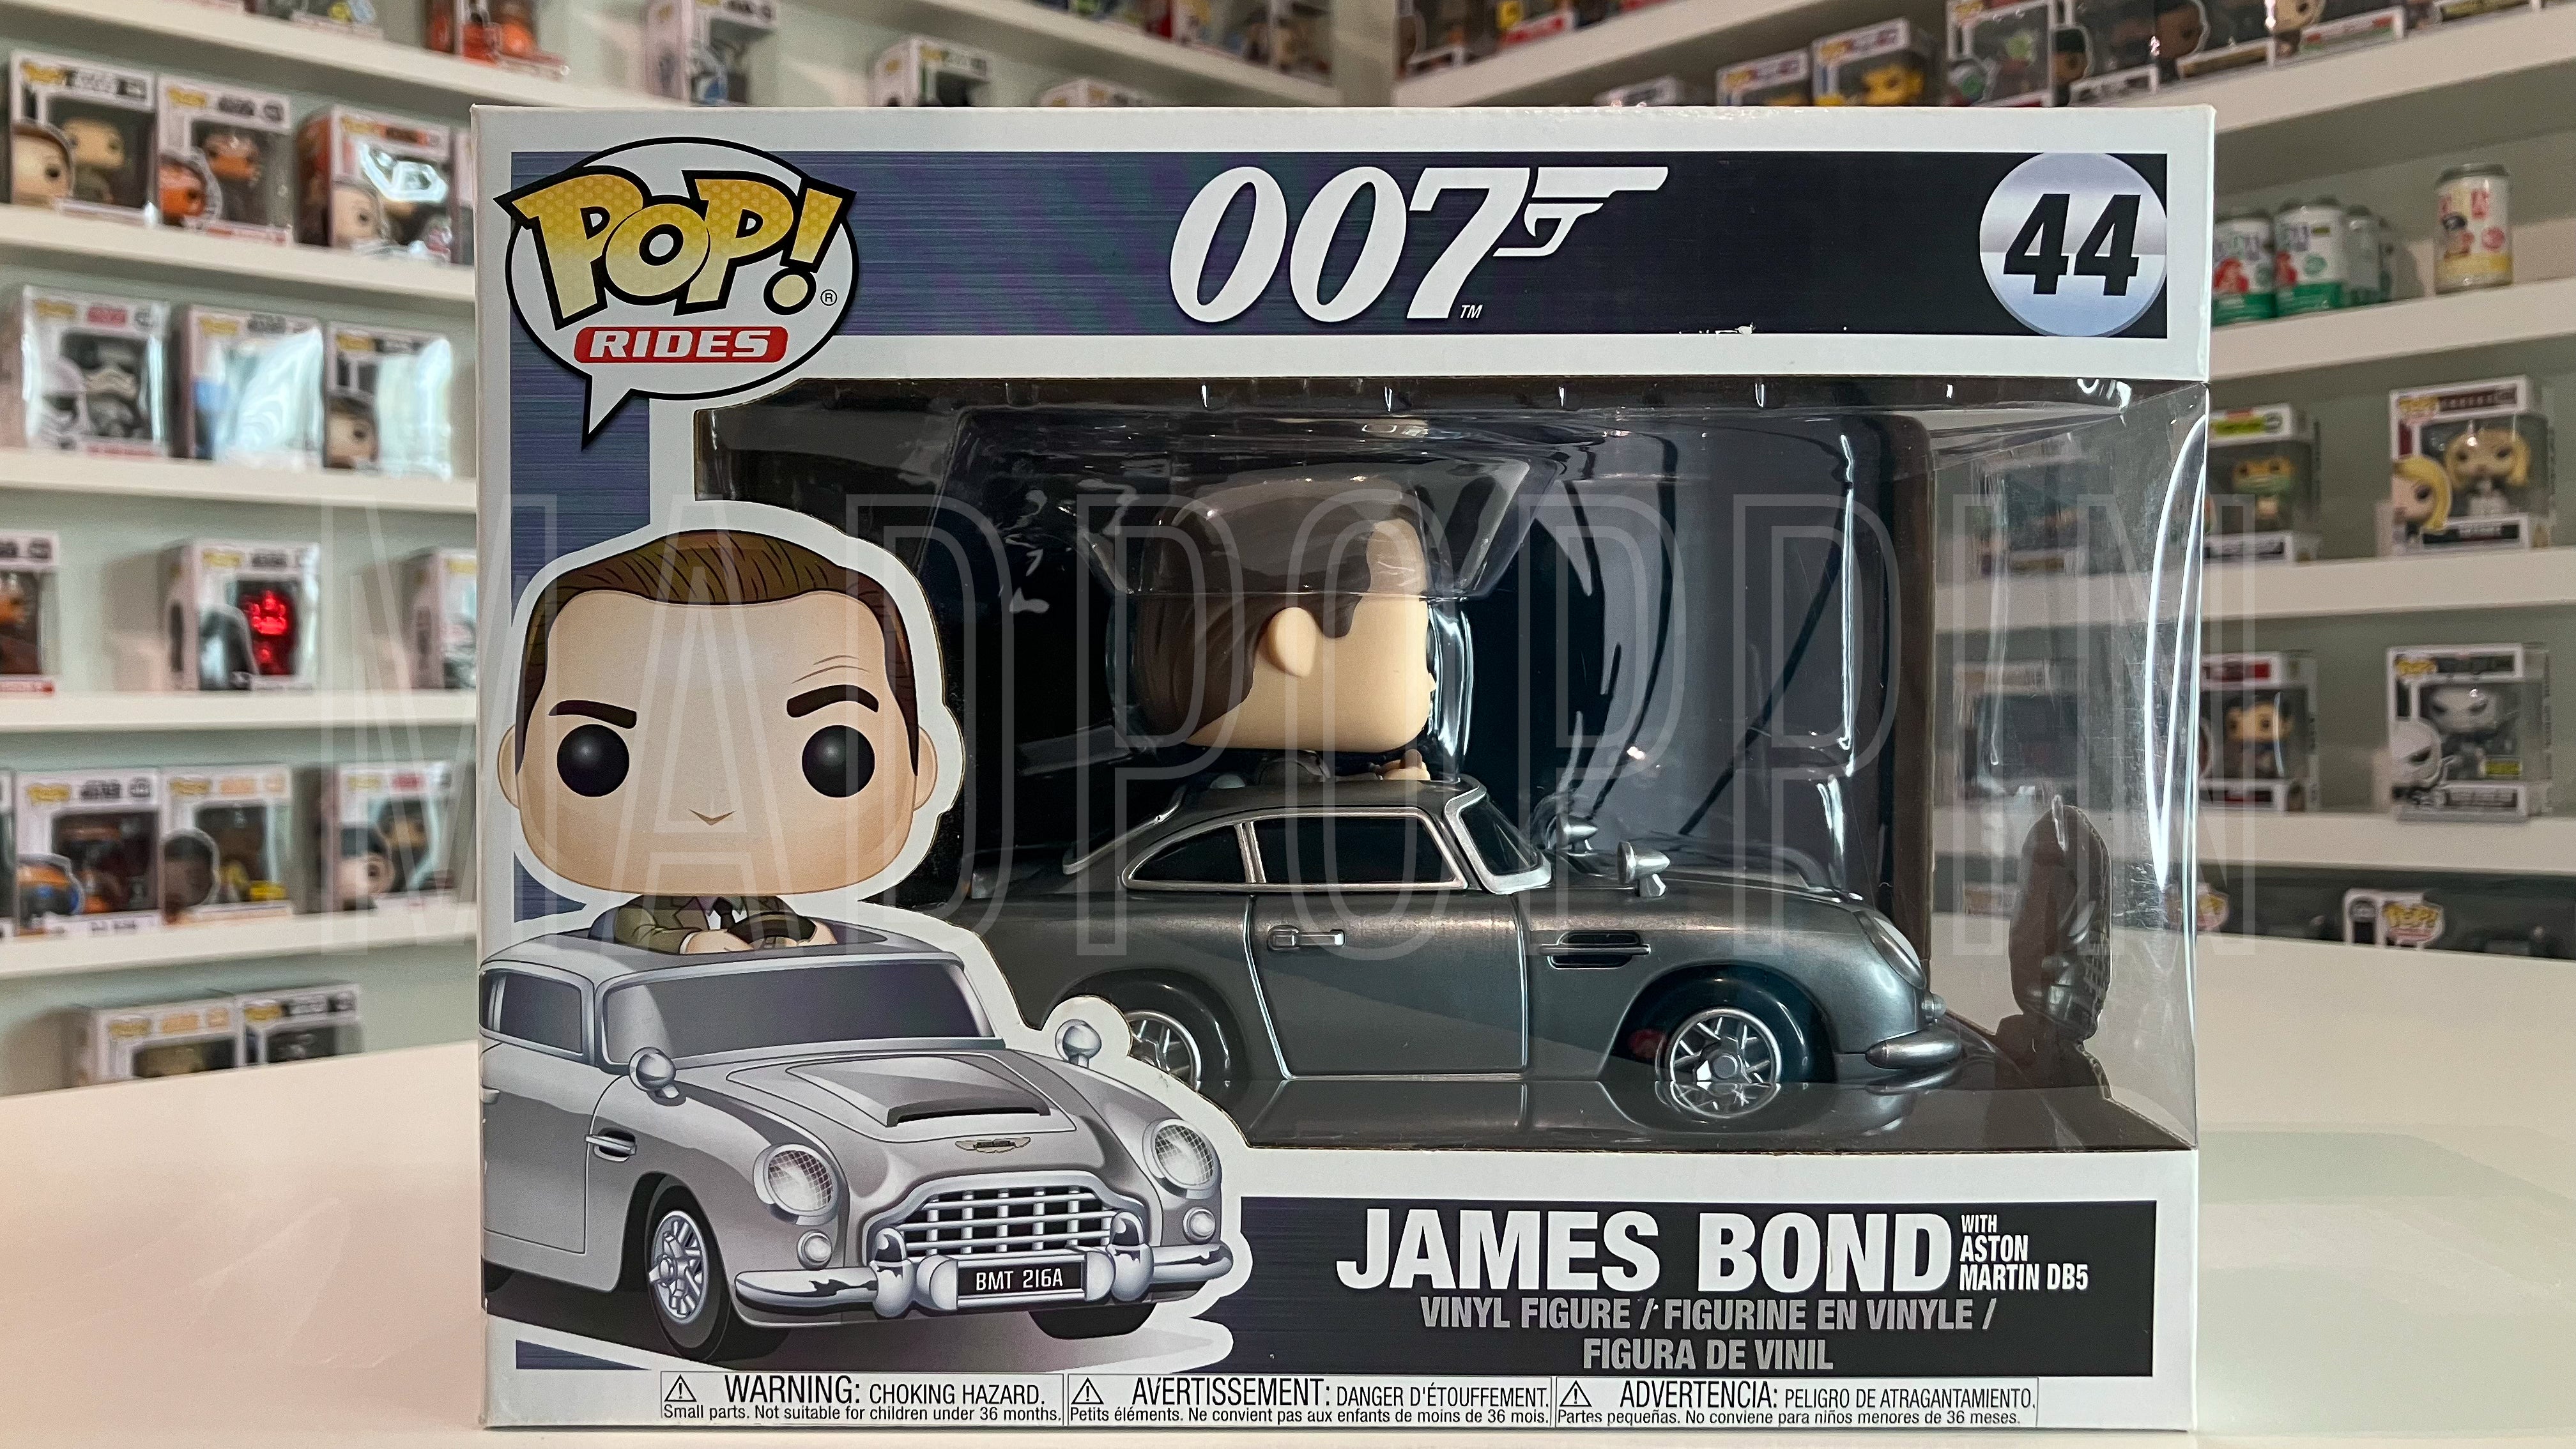 Funko POP! Rides Movie 007 James Bond w/ Aston Martin DB5 Vaulted #44